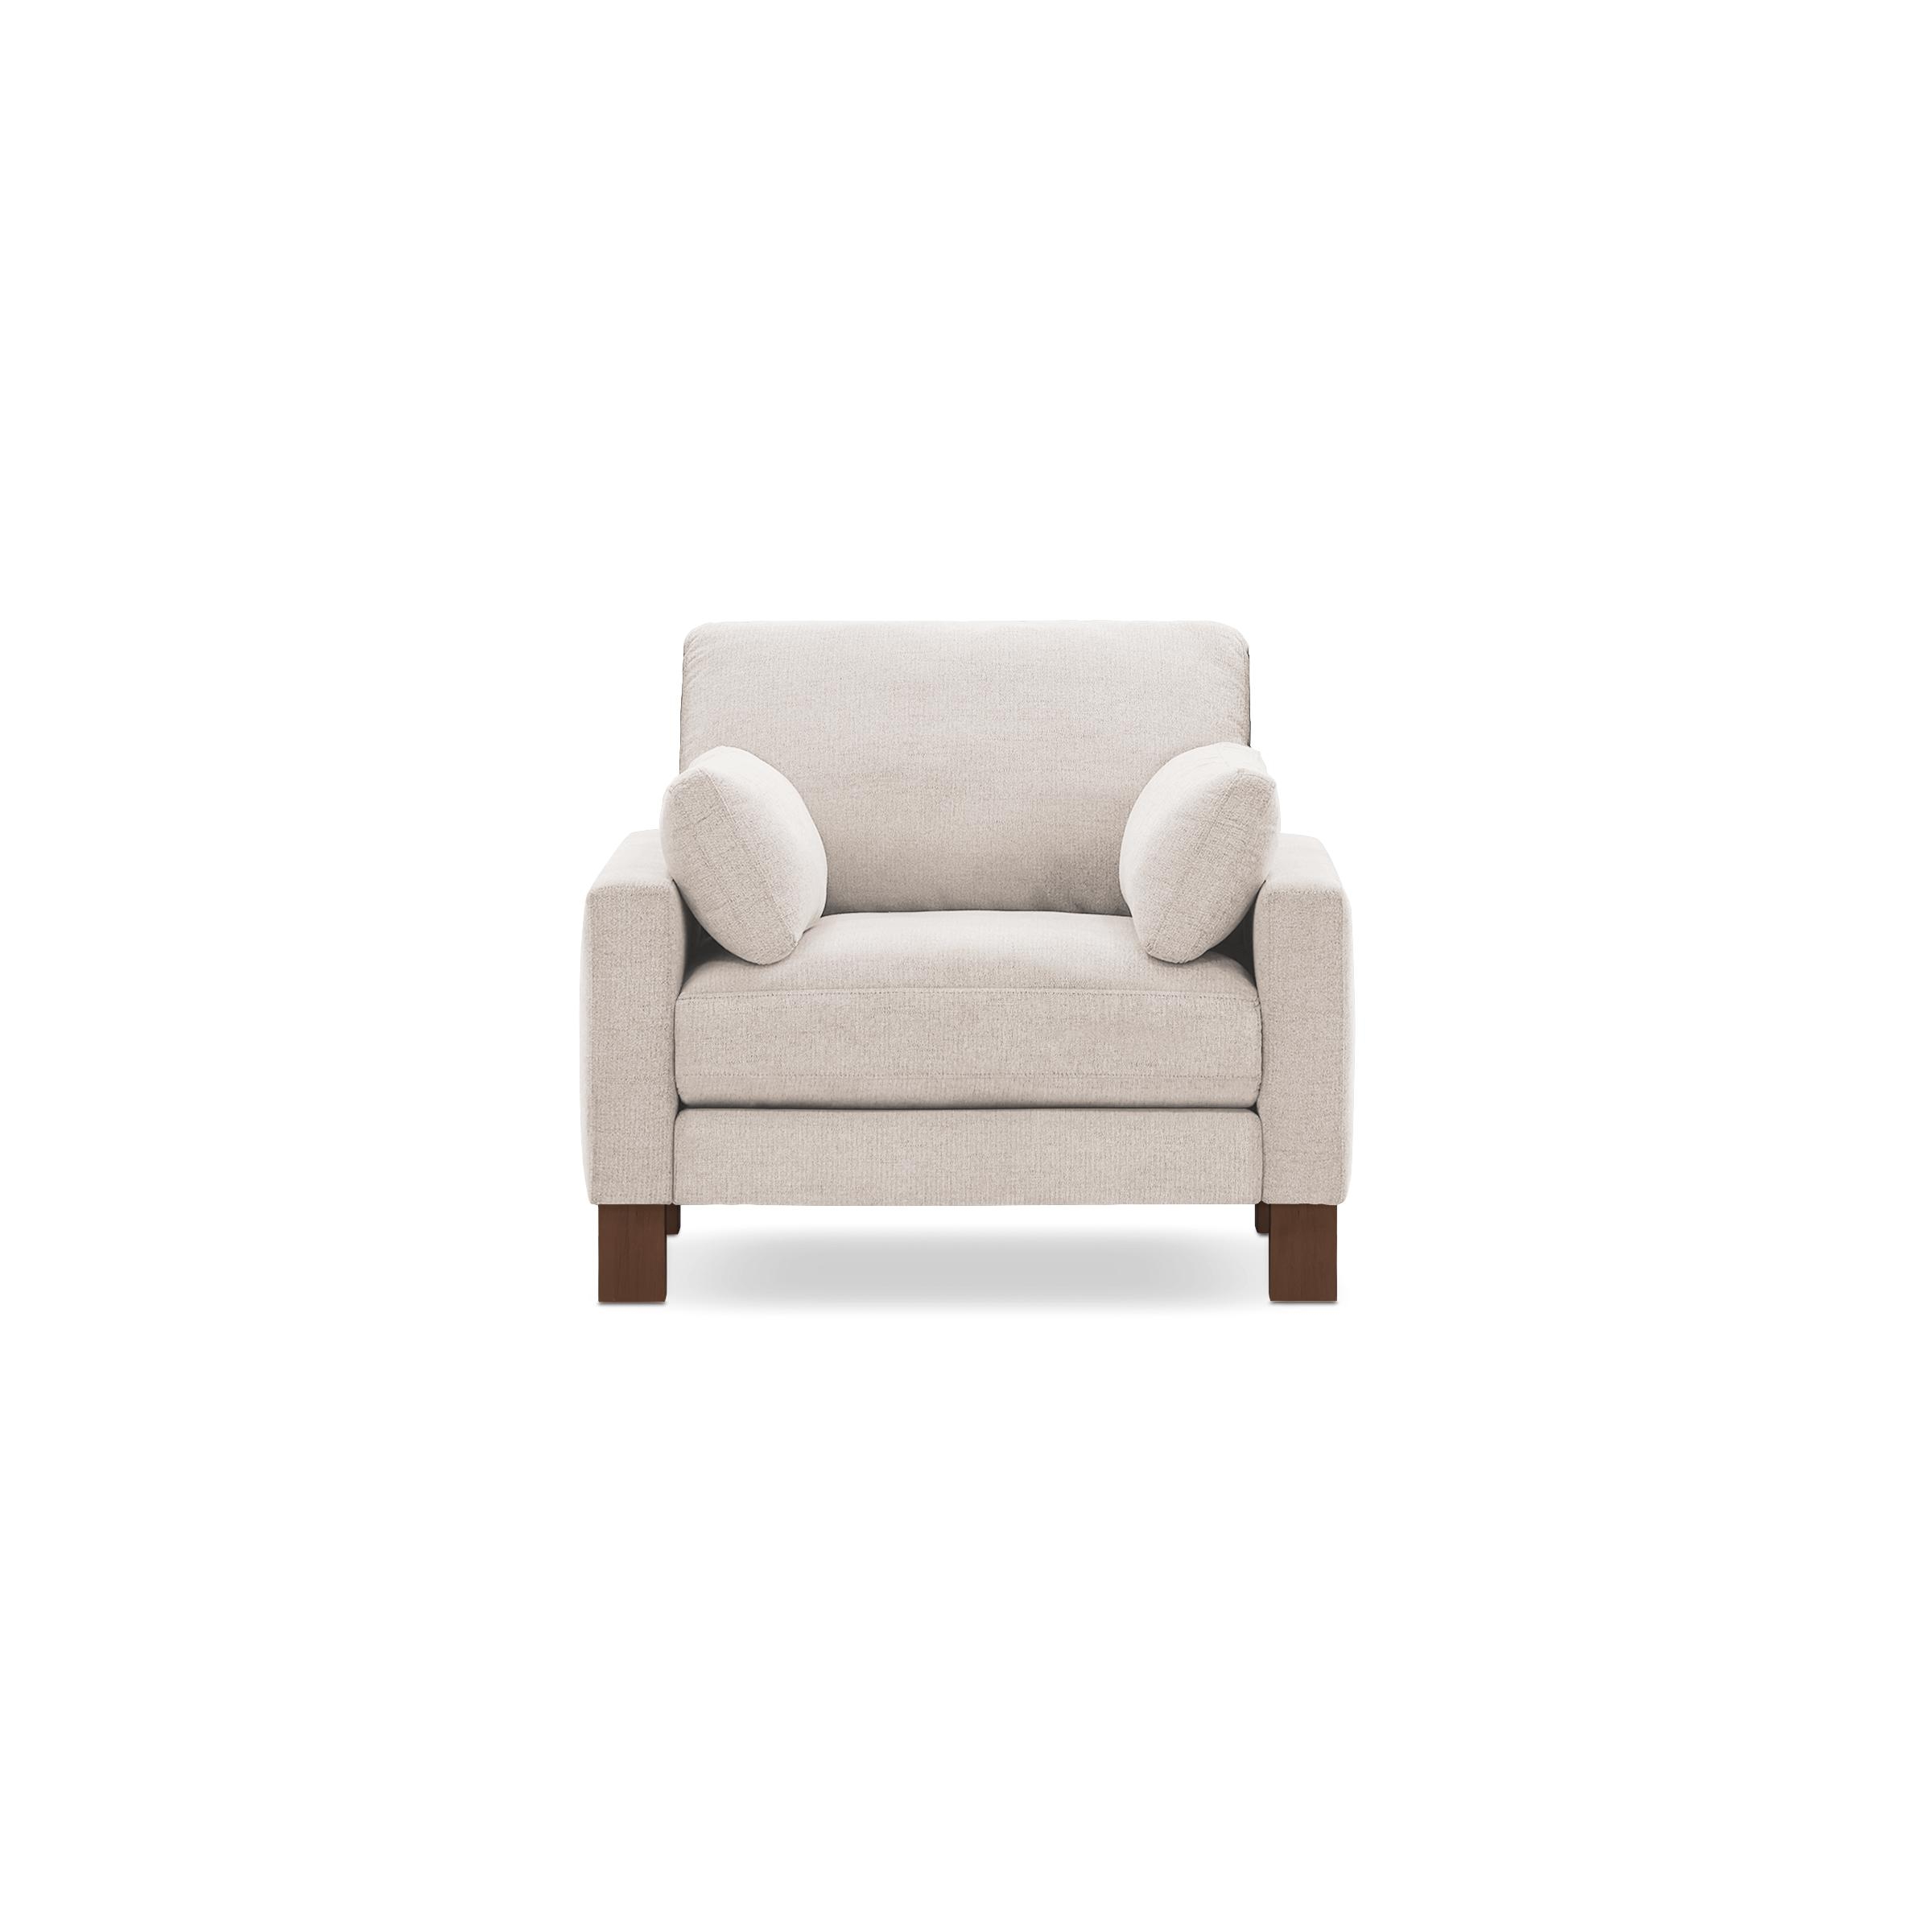 Union Armchair in Ivory, Leg Finish: WalnutLegs - Image 0